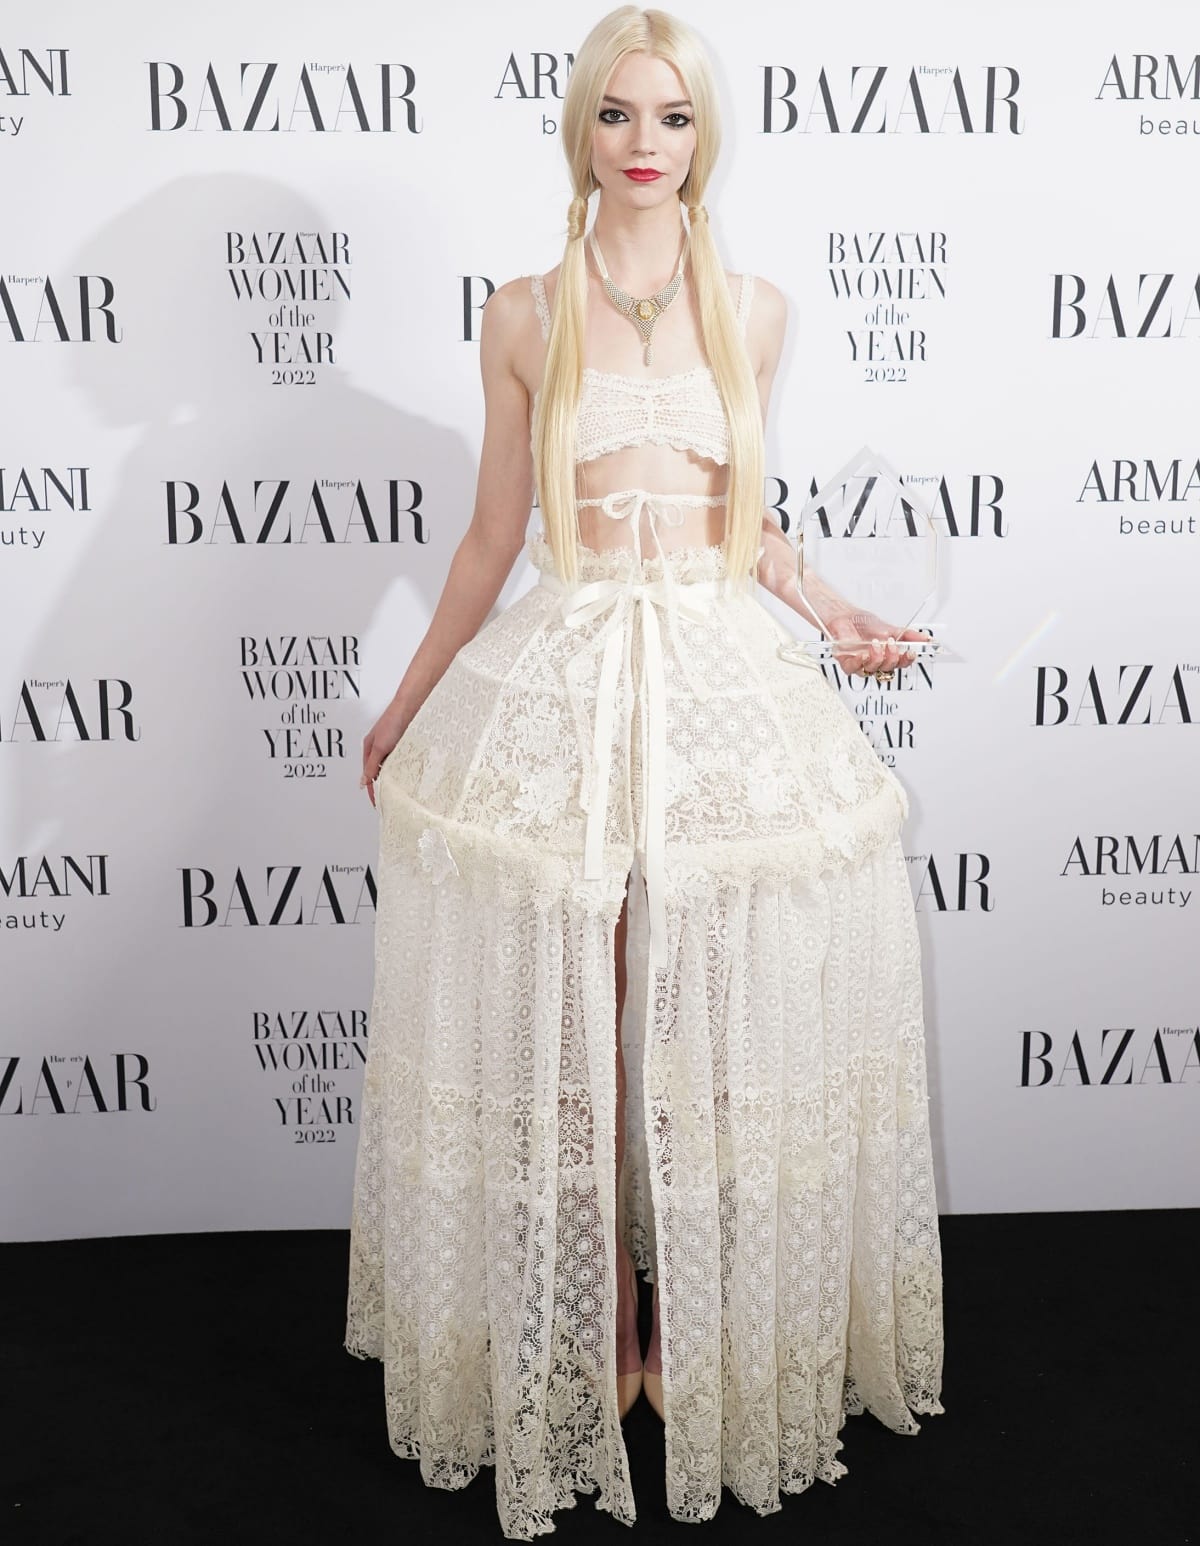 Anya Taylor-Joy in Dior at the Harper’s Bazaar Women of the Year 2022 Awards